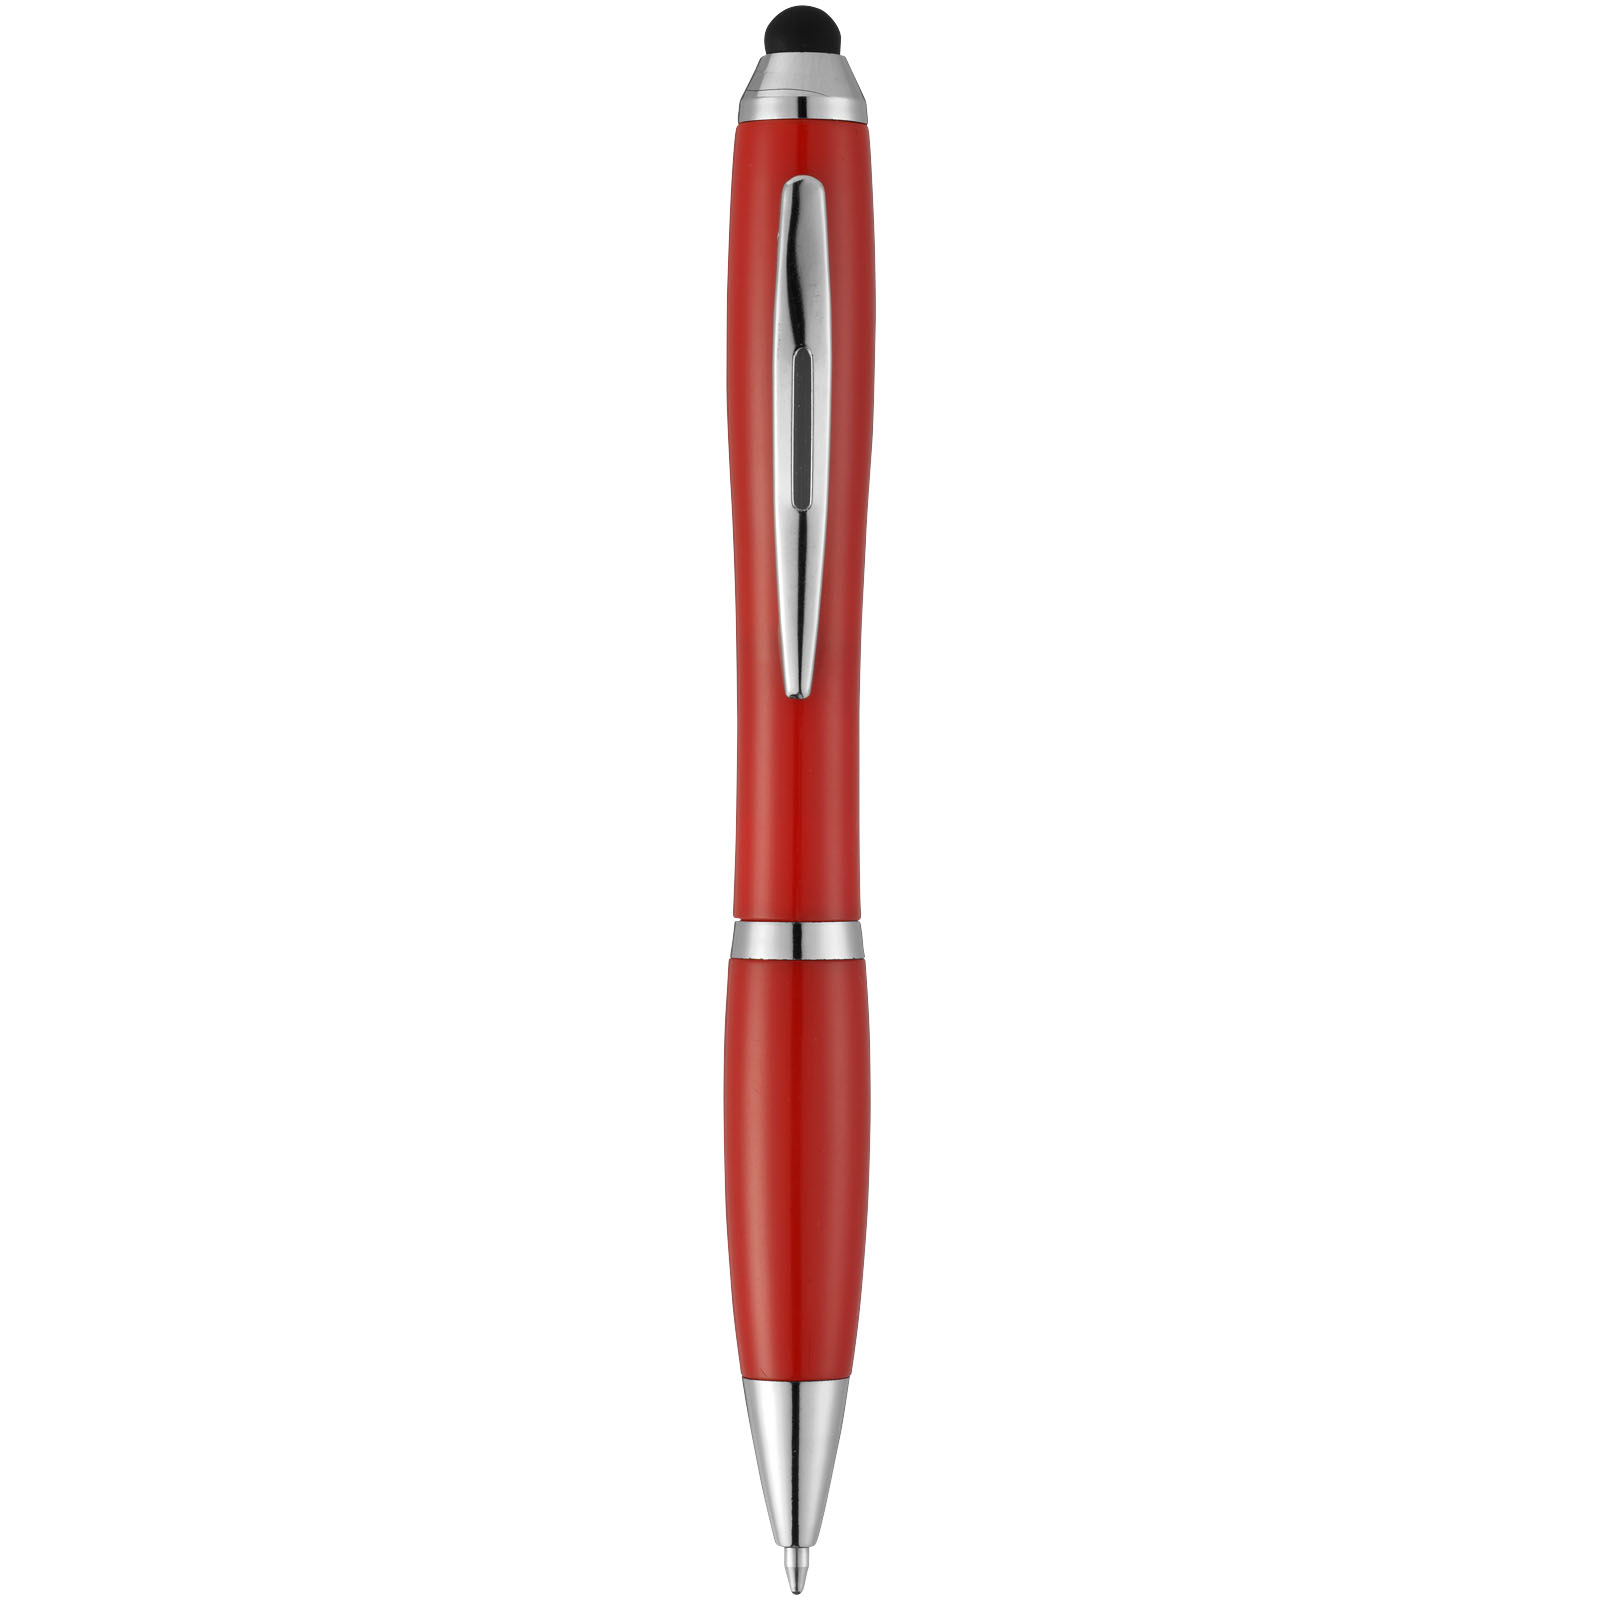 Advertising Ballpoint Pens - Nash stylus ballpoint pen with coloured grip